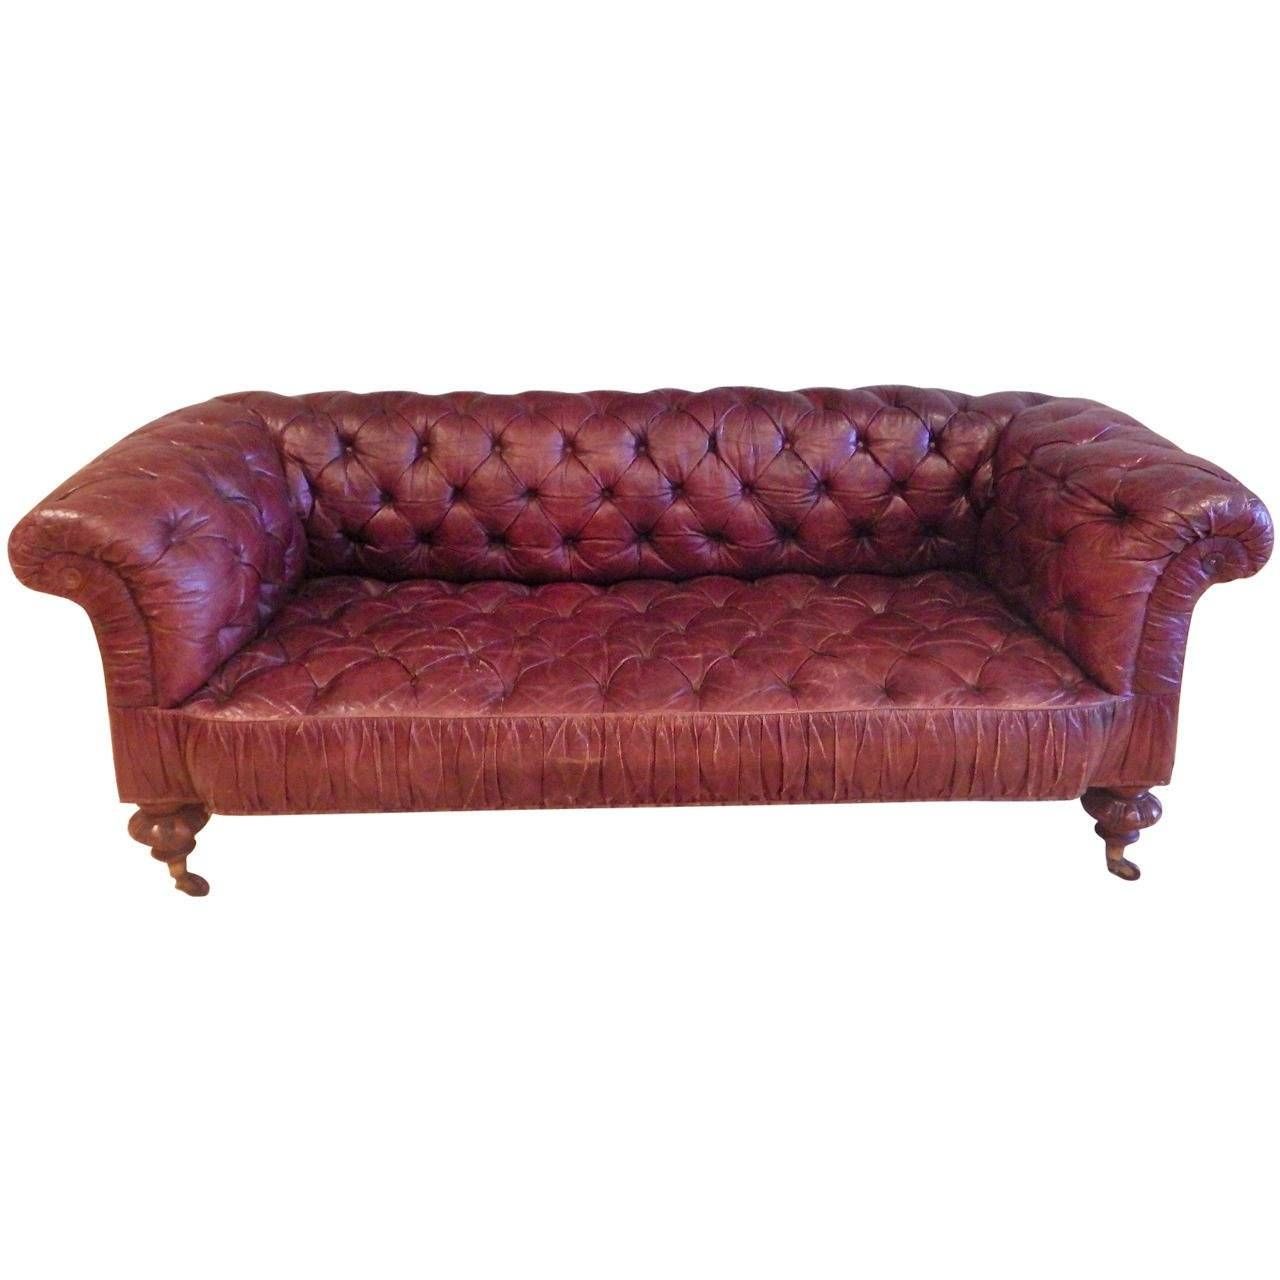 Superb Victorian Leather Sofa, Circa 1870 For Sale At 1stdibs Throughout Victorian Leather Sofas (View 3 of 30)